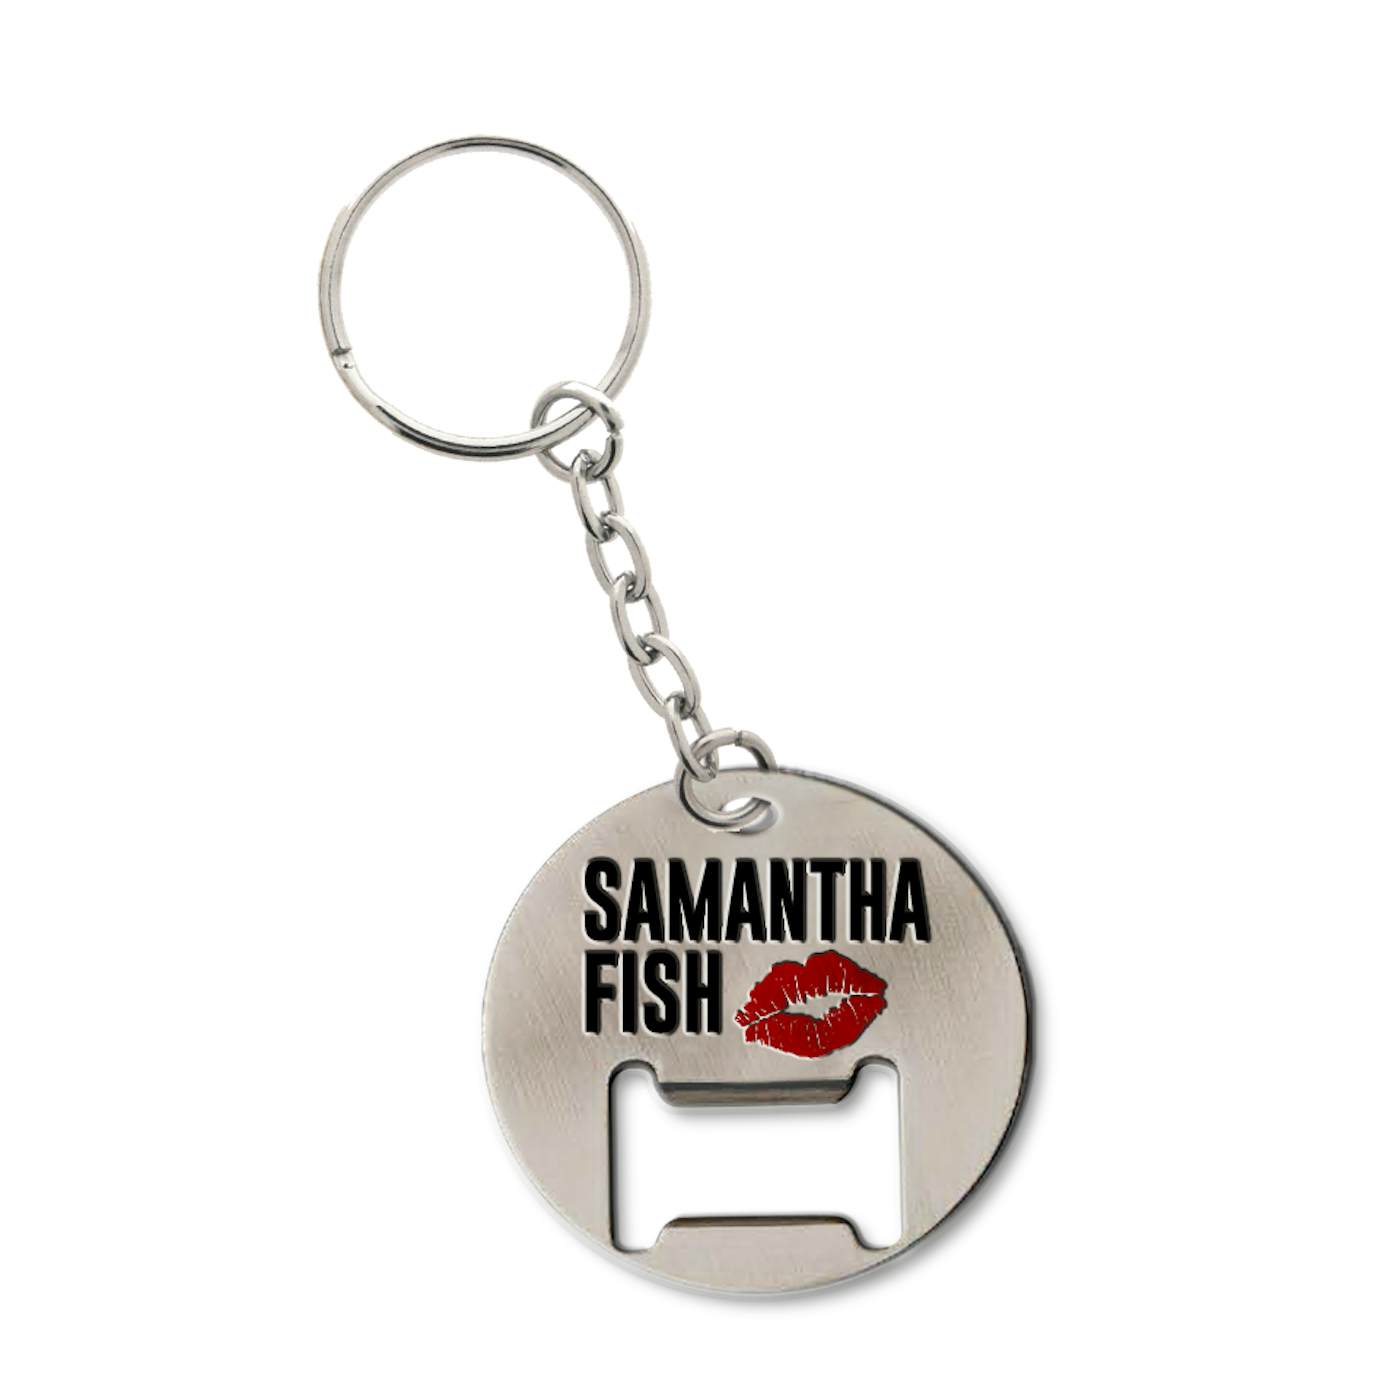 Samantha Fish Bottle Opener Keychain